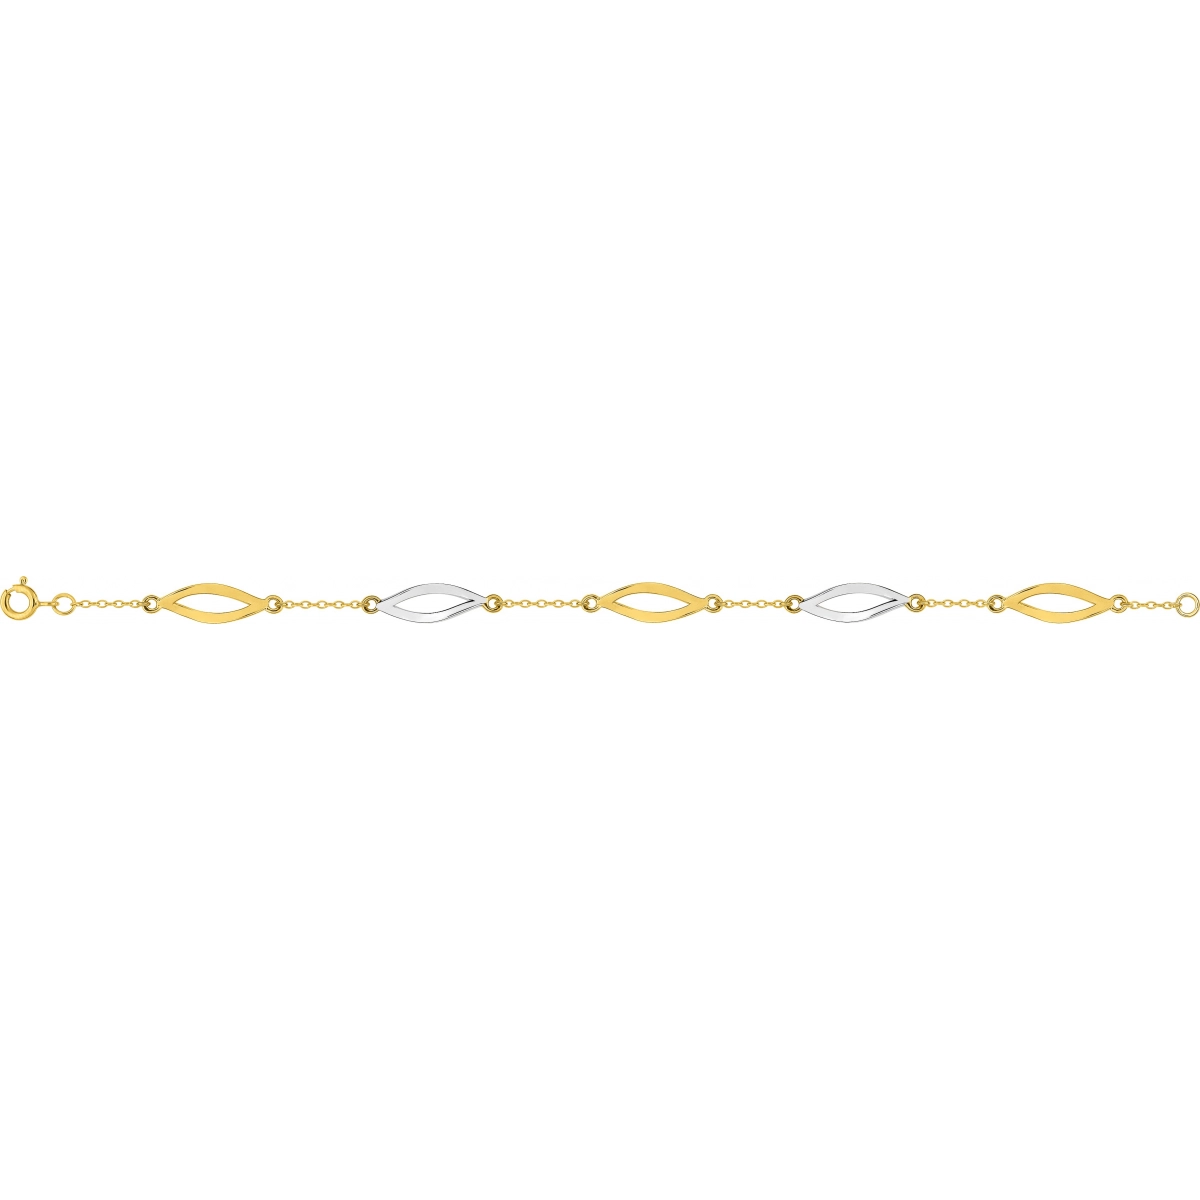 Bracelet 18cm gold plated Brass 2TG  Lua Blanca  BABE6018.0